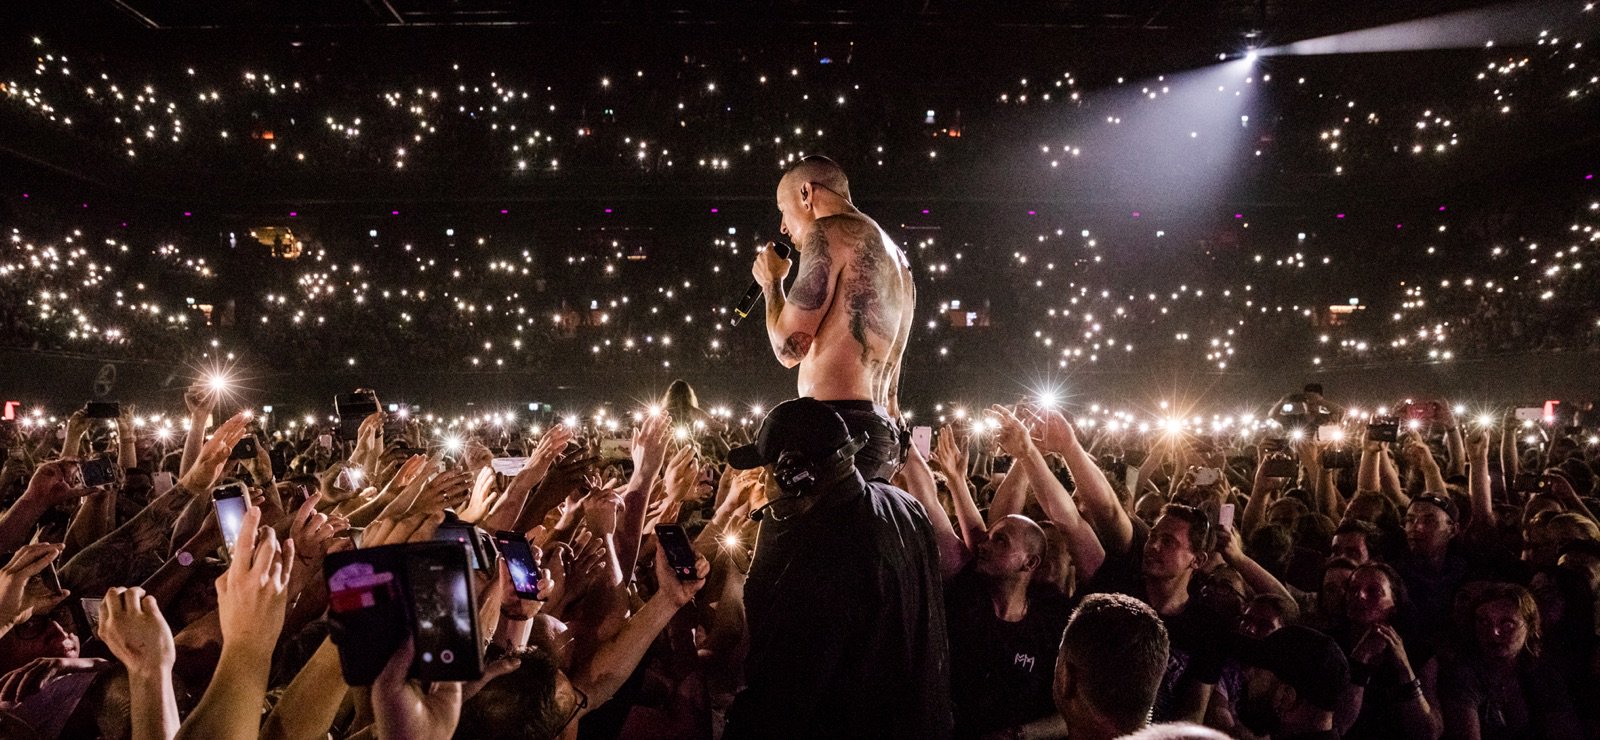 Fallece el vocalista de Linkin Park, Chester Bennington